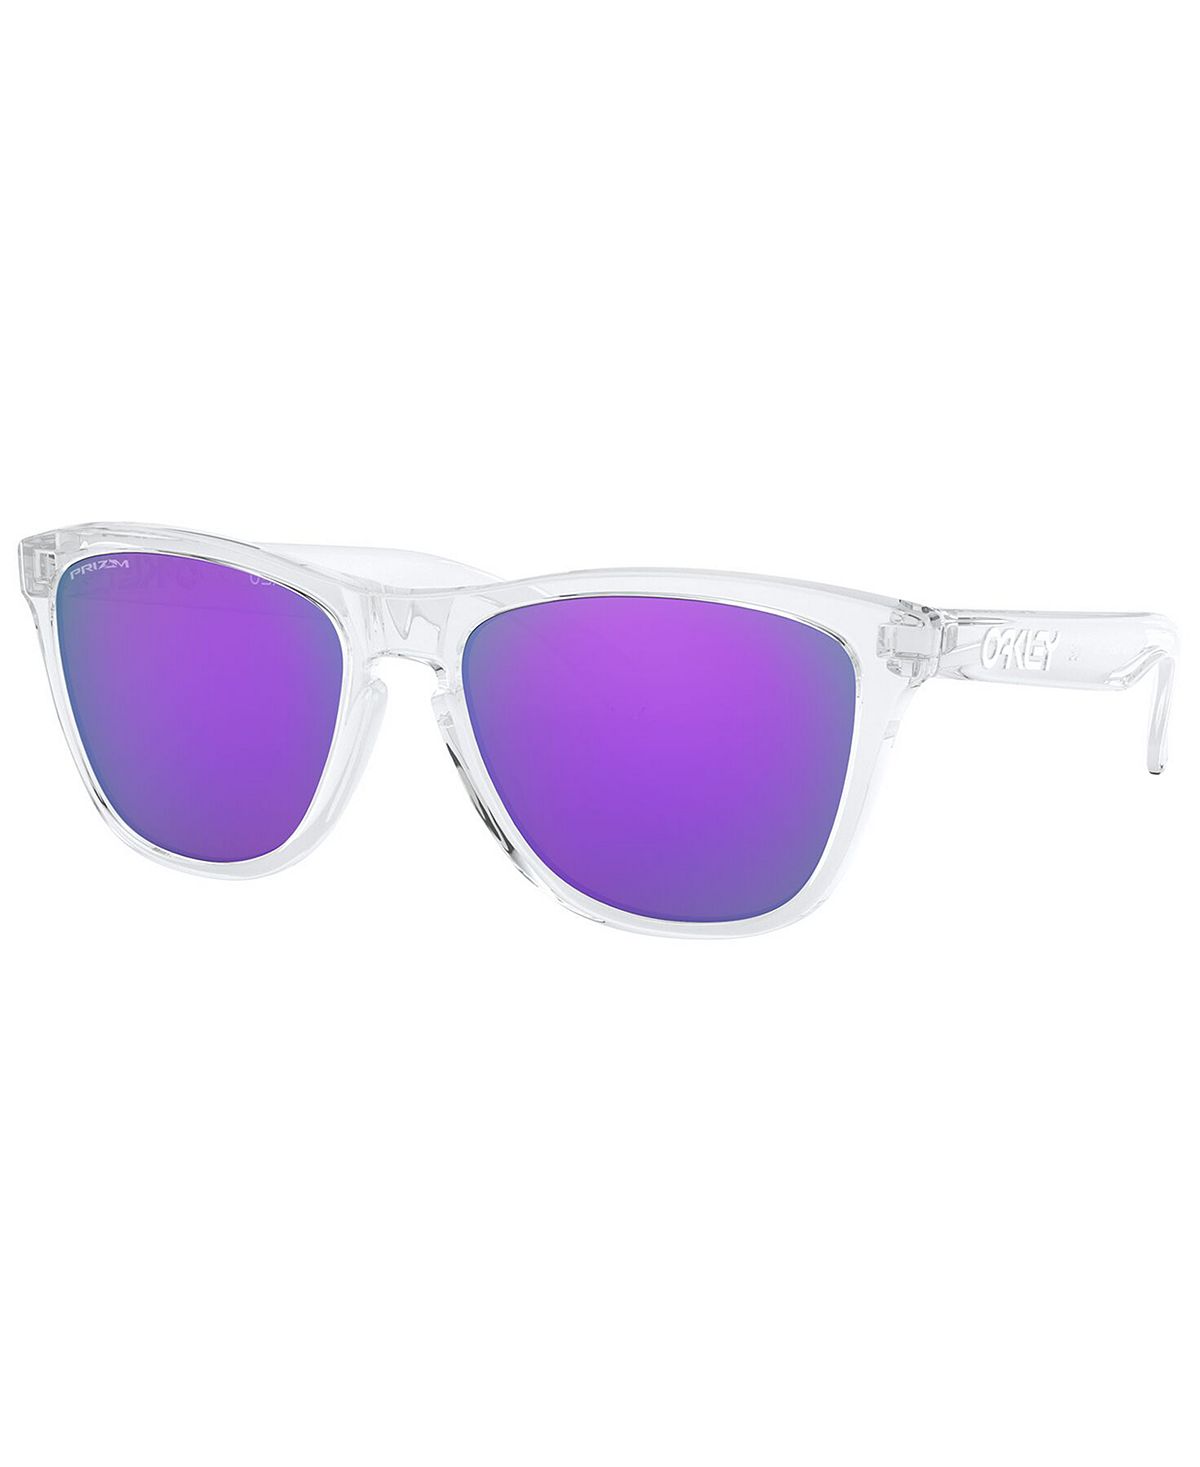 Мужские солнцезащитные очки из лягушачьей кожи, OO9013 Oakley цена и фото